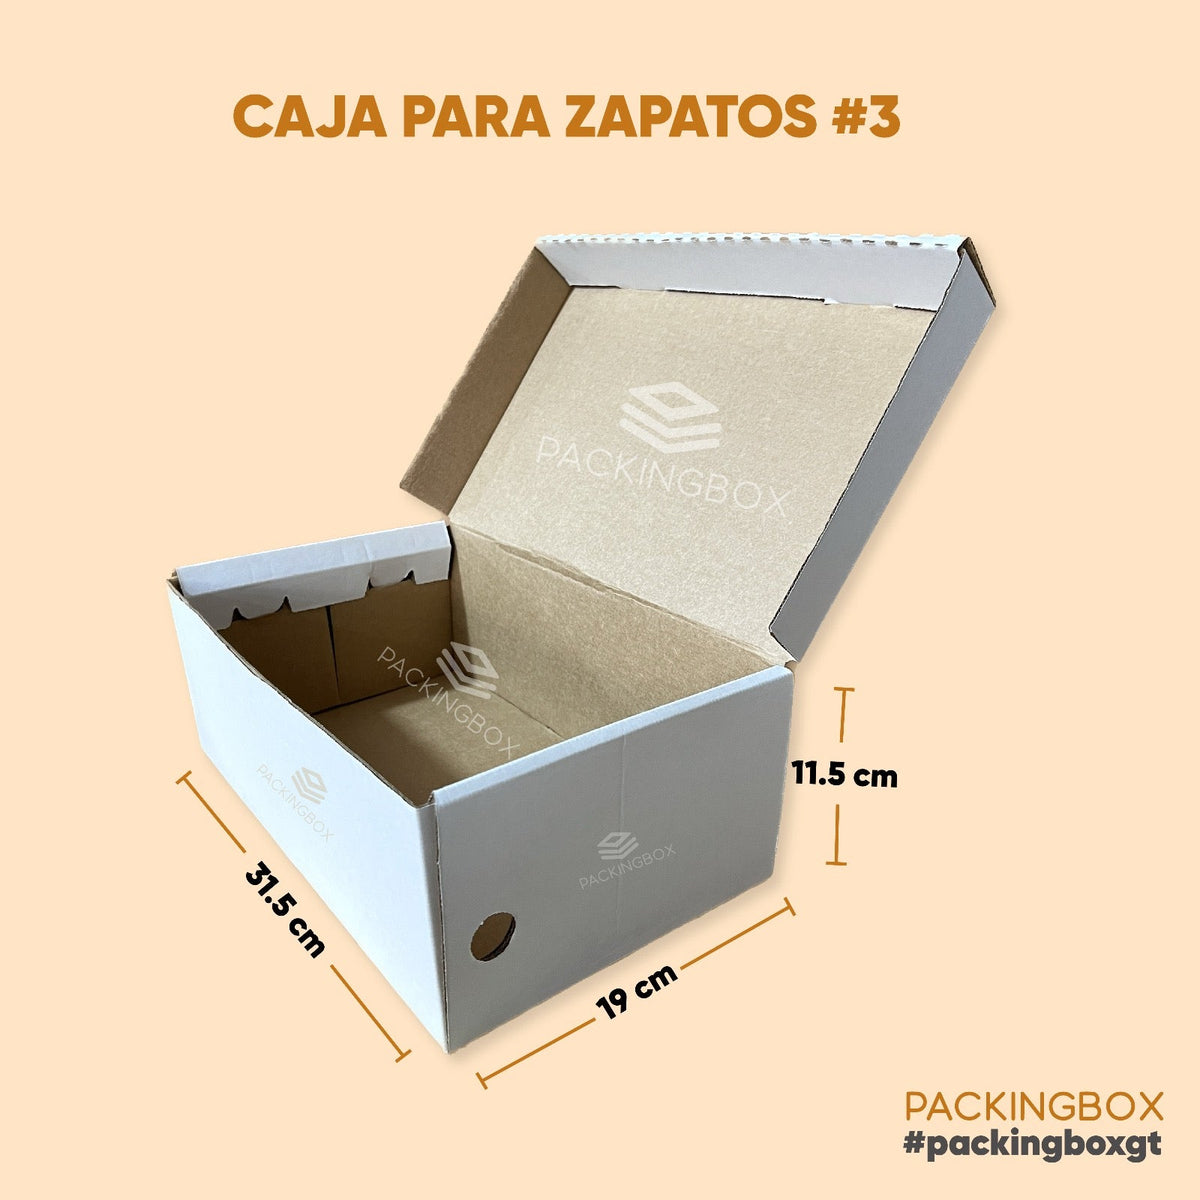 Caja para Zapatos #3 de 31.5 x 19 x 11.5 cm — Packingbox